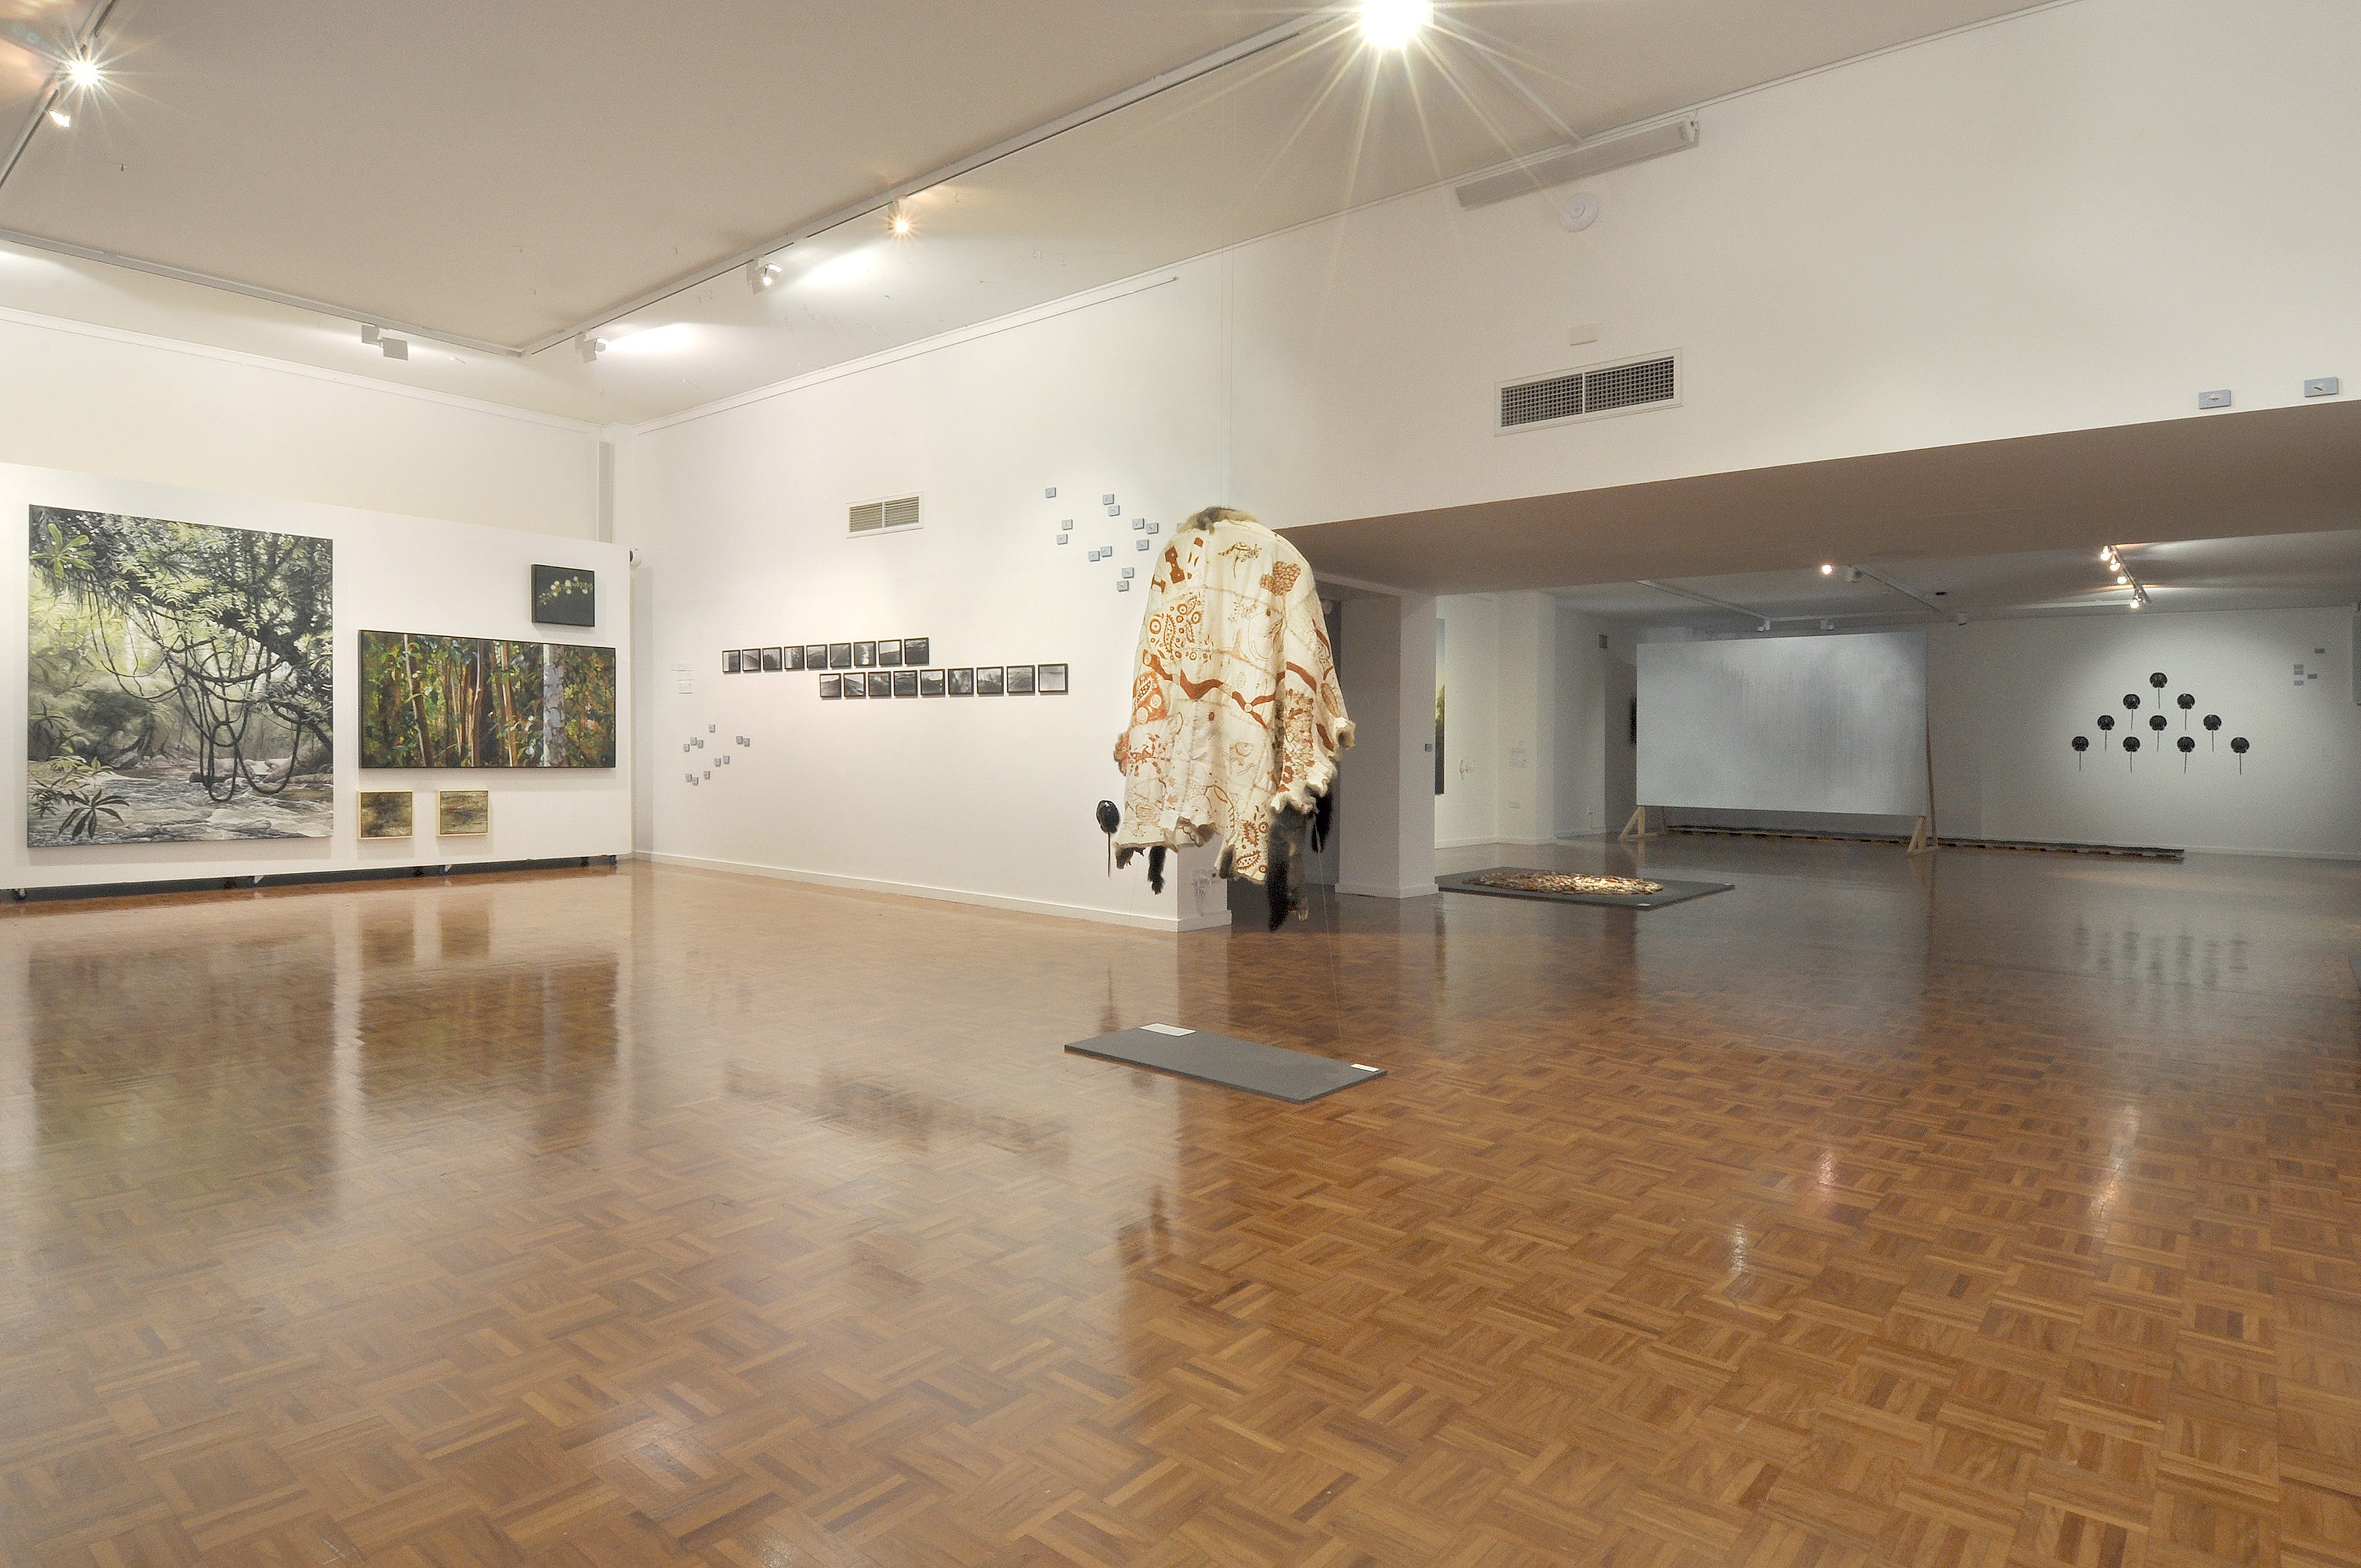 Noosa Regional Gallery - Find Attractions